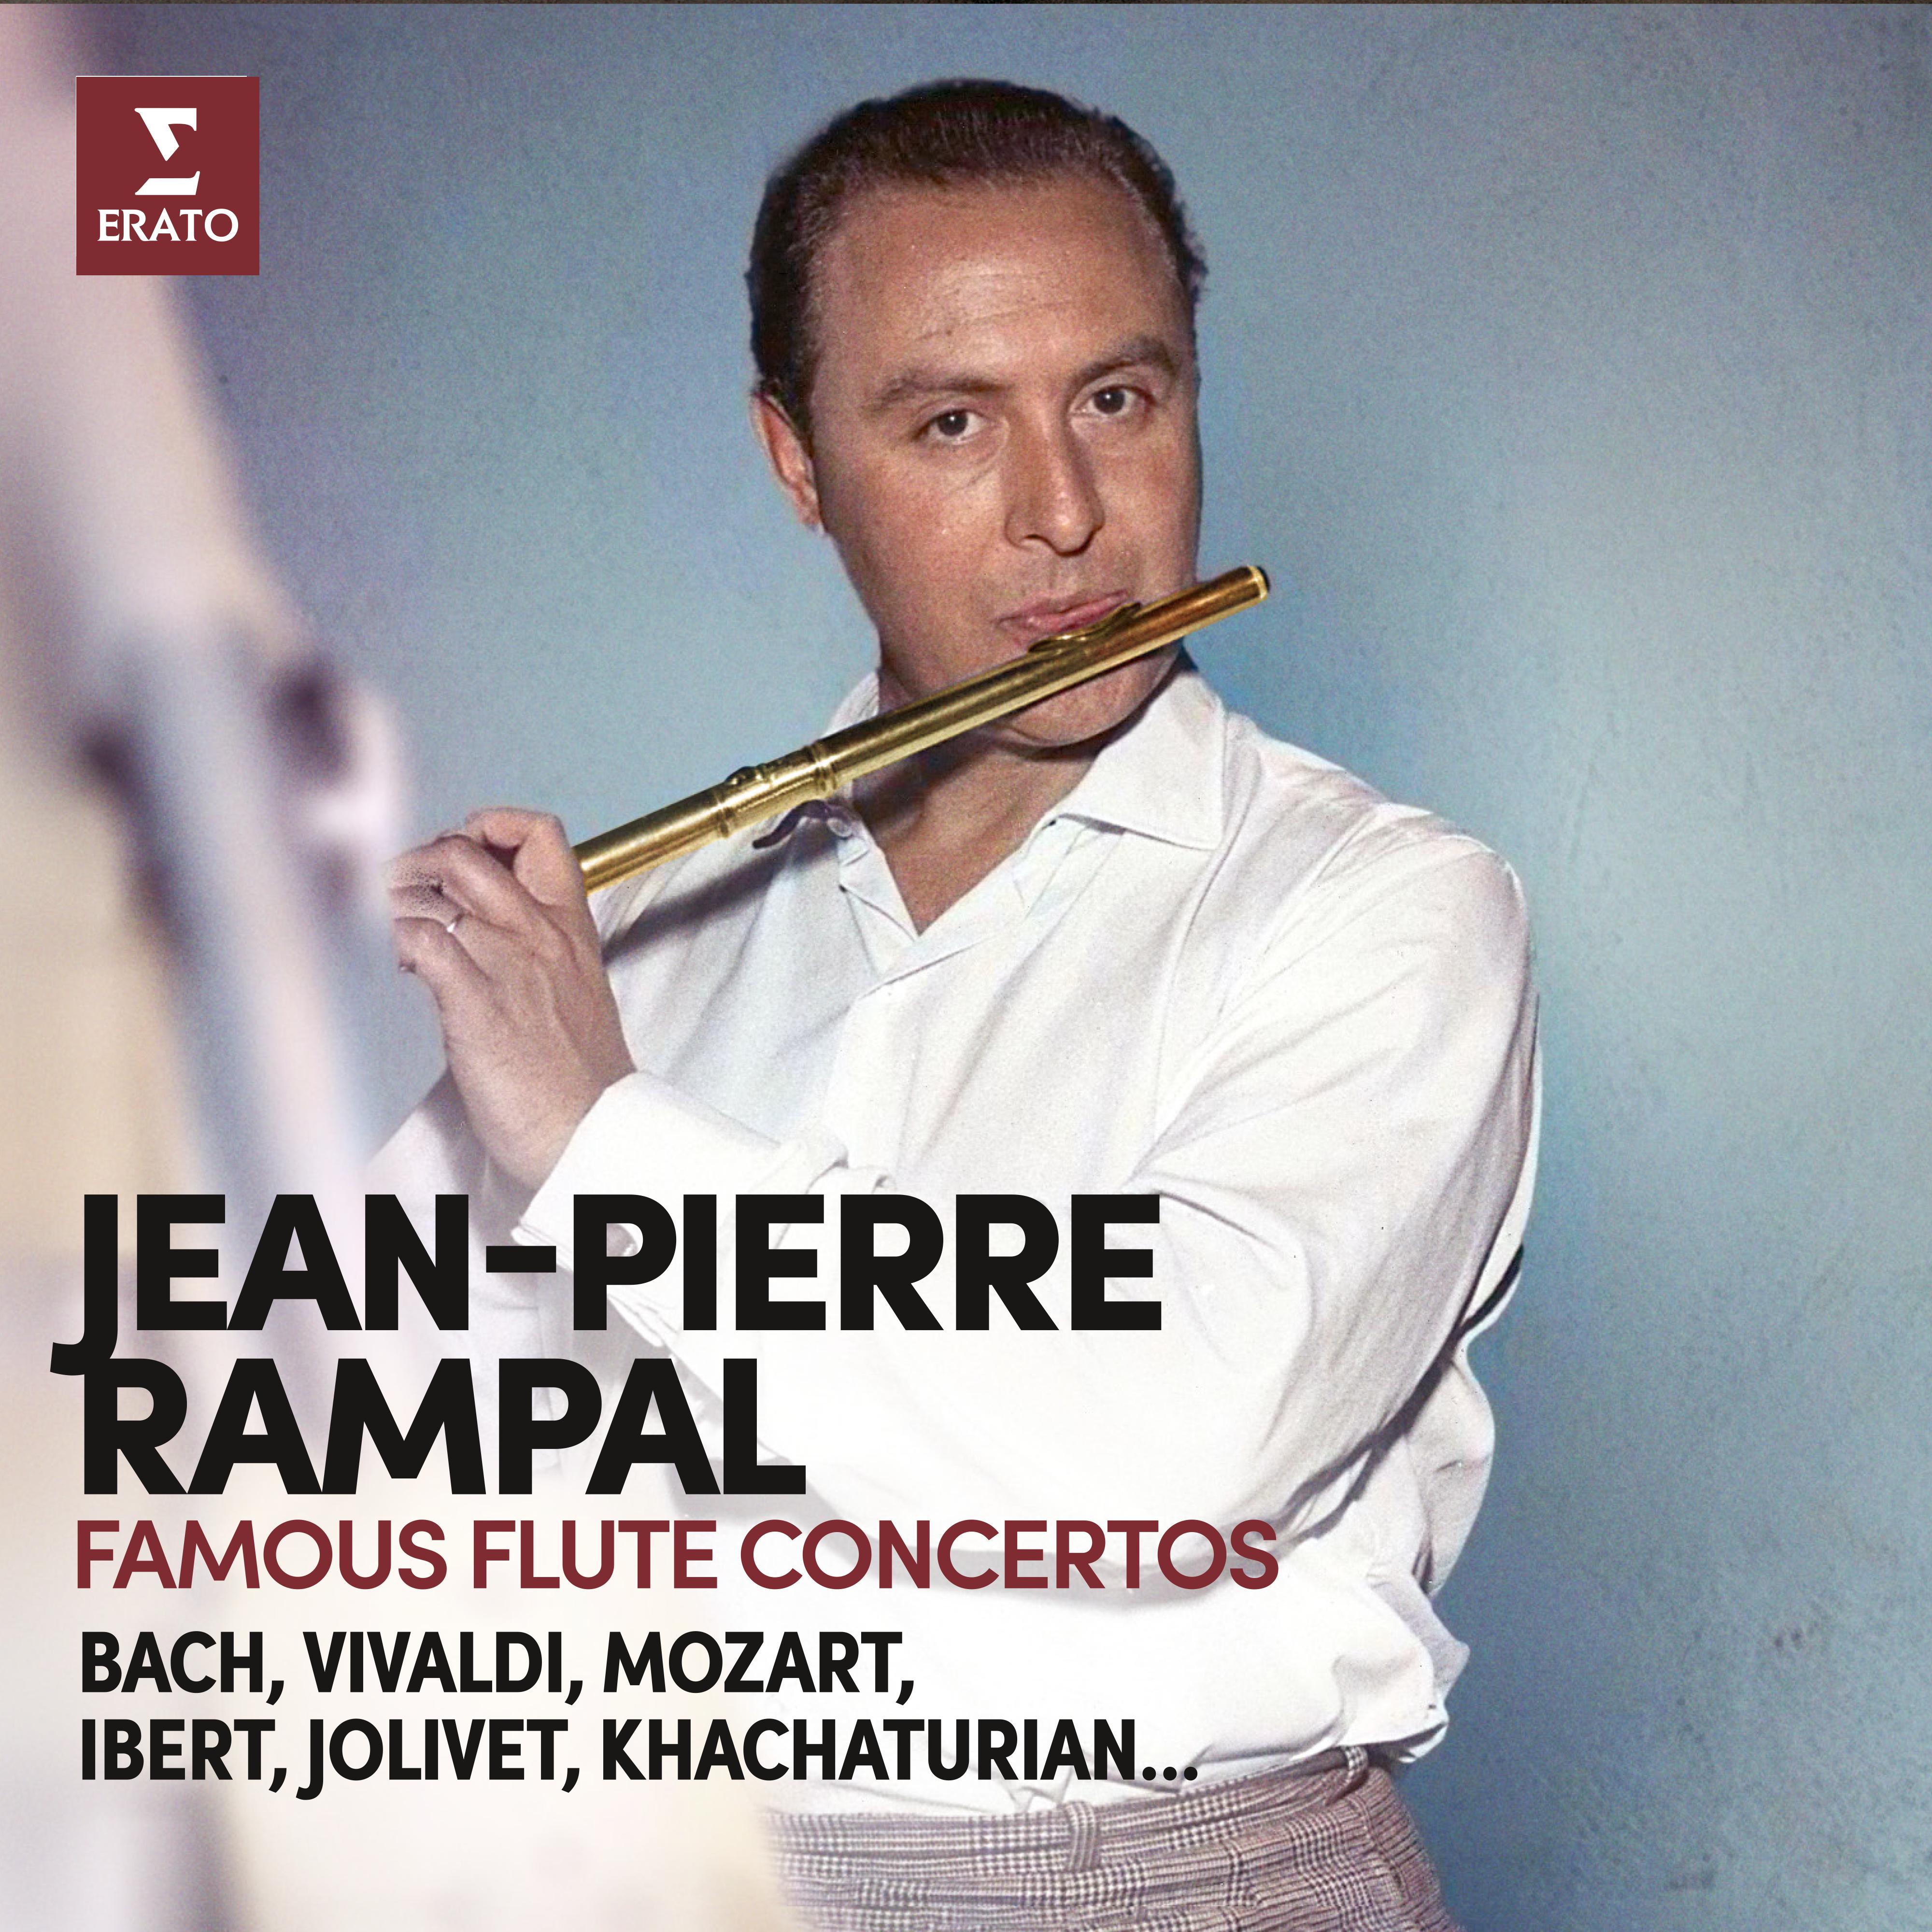 Jean-Pierre Rampal - Flute Concerto in A Minor:II. Gavottes I & II